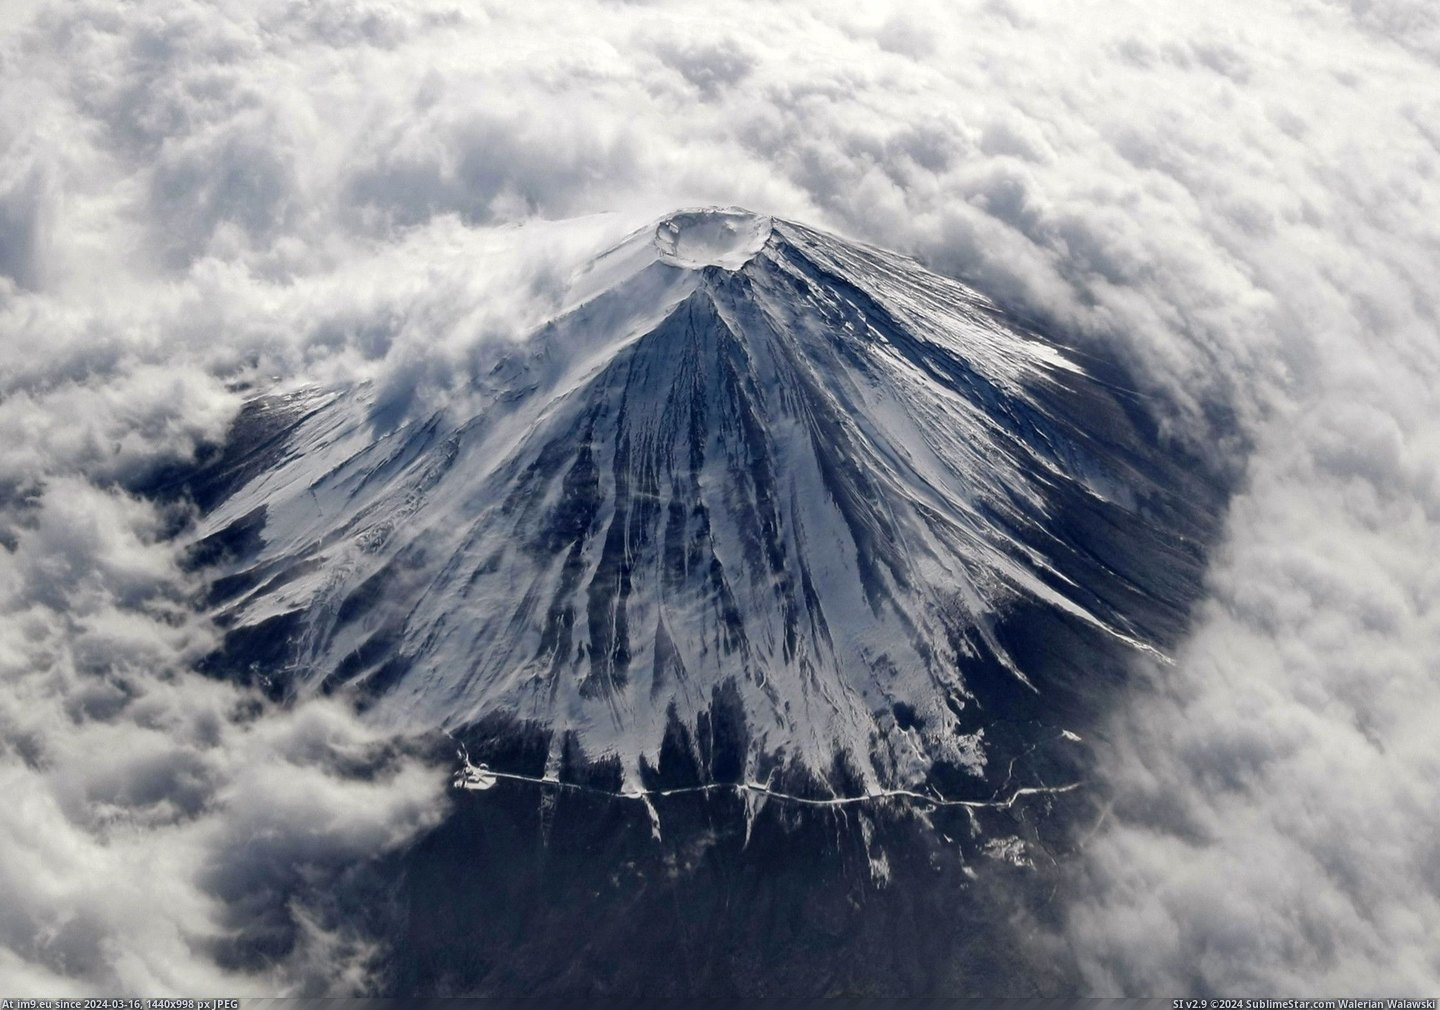 #Mount #Fiji #Aerial [Earthporn] Mount Fiji - Aerial [2200x1537] Pic. (Bild von album My r/EARTHPORN favs))